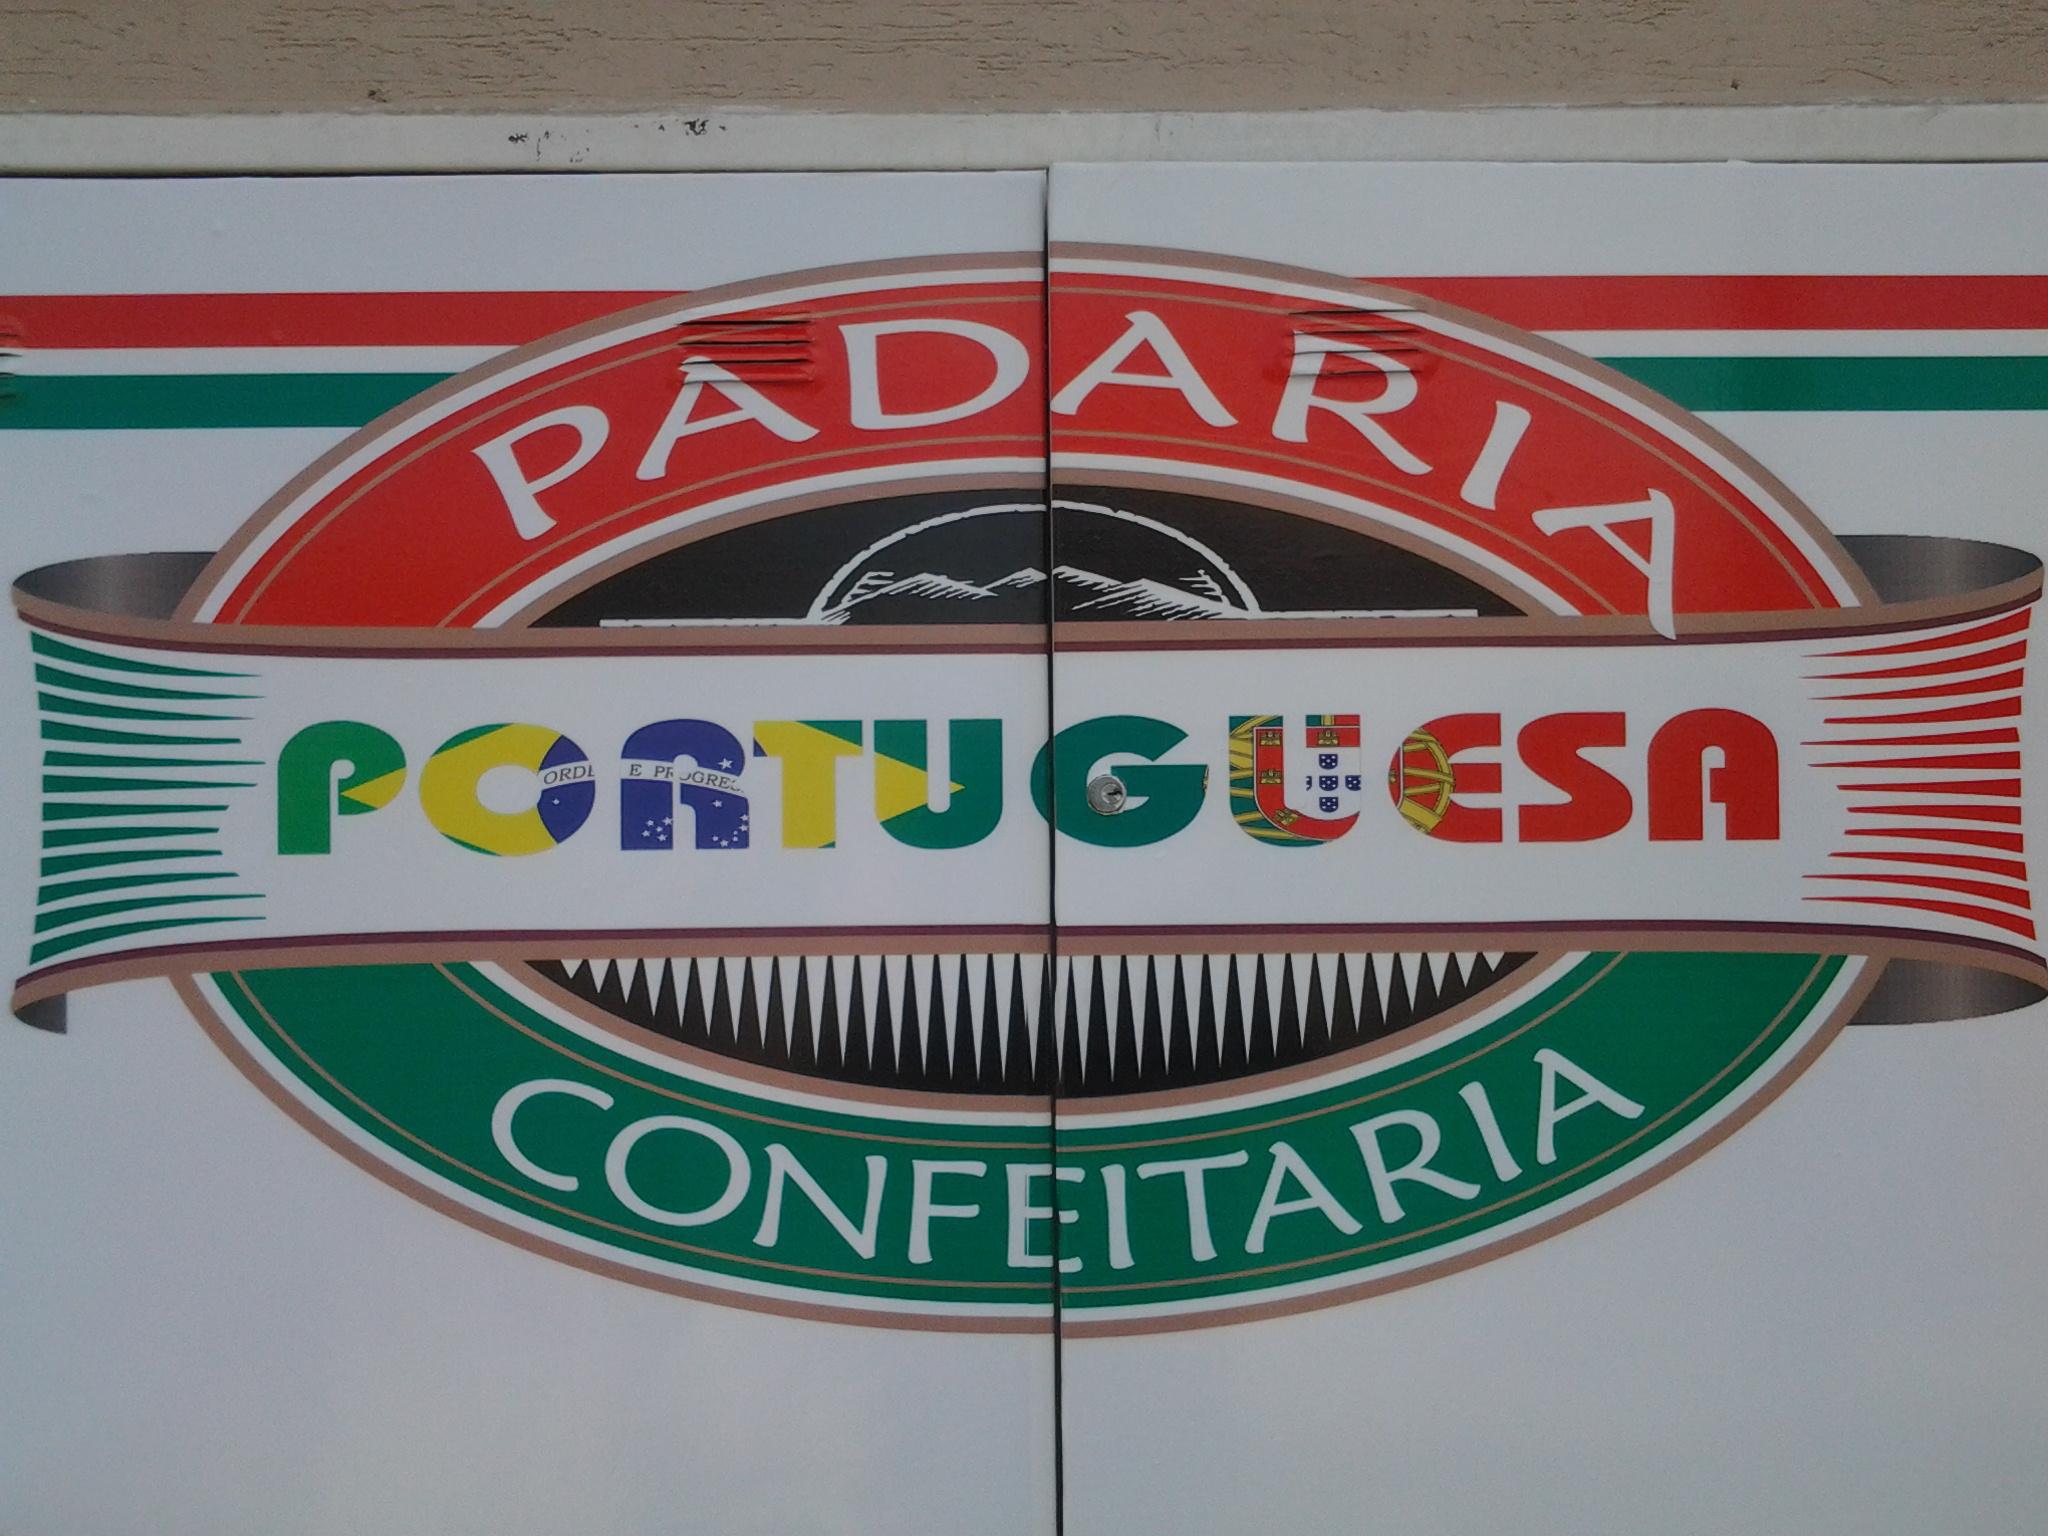 Padaria Portuguesa logo